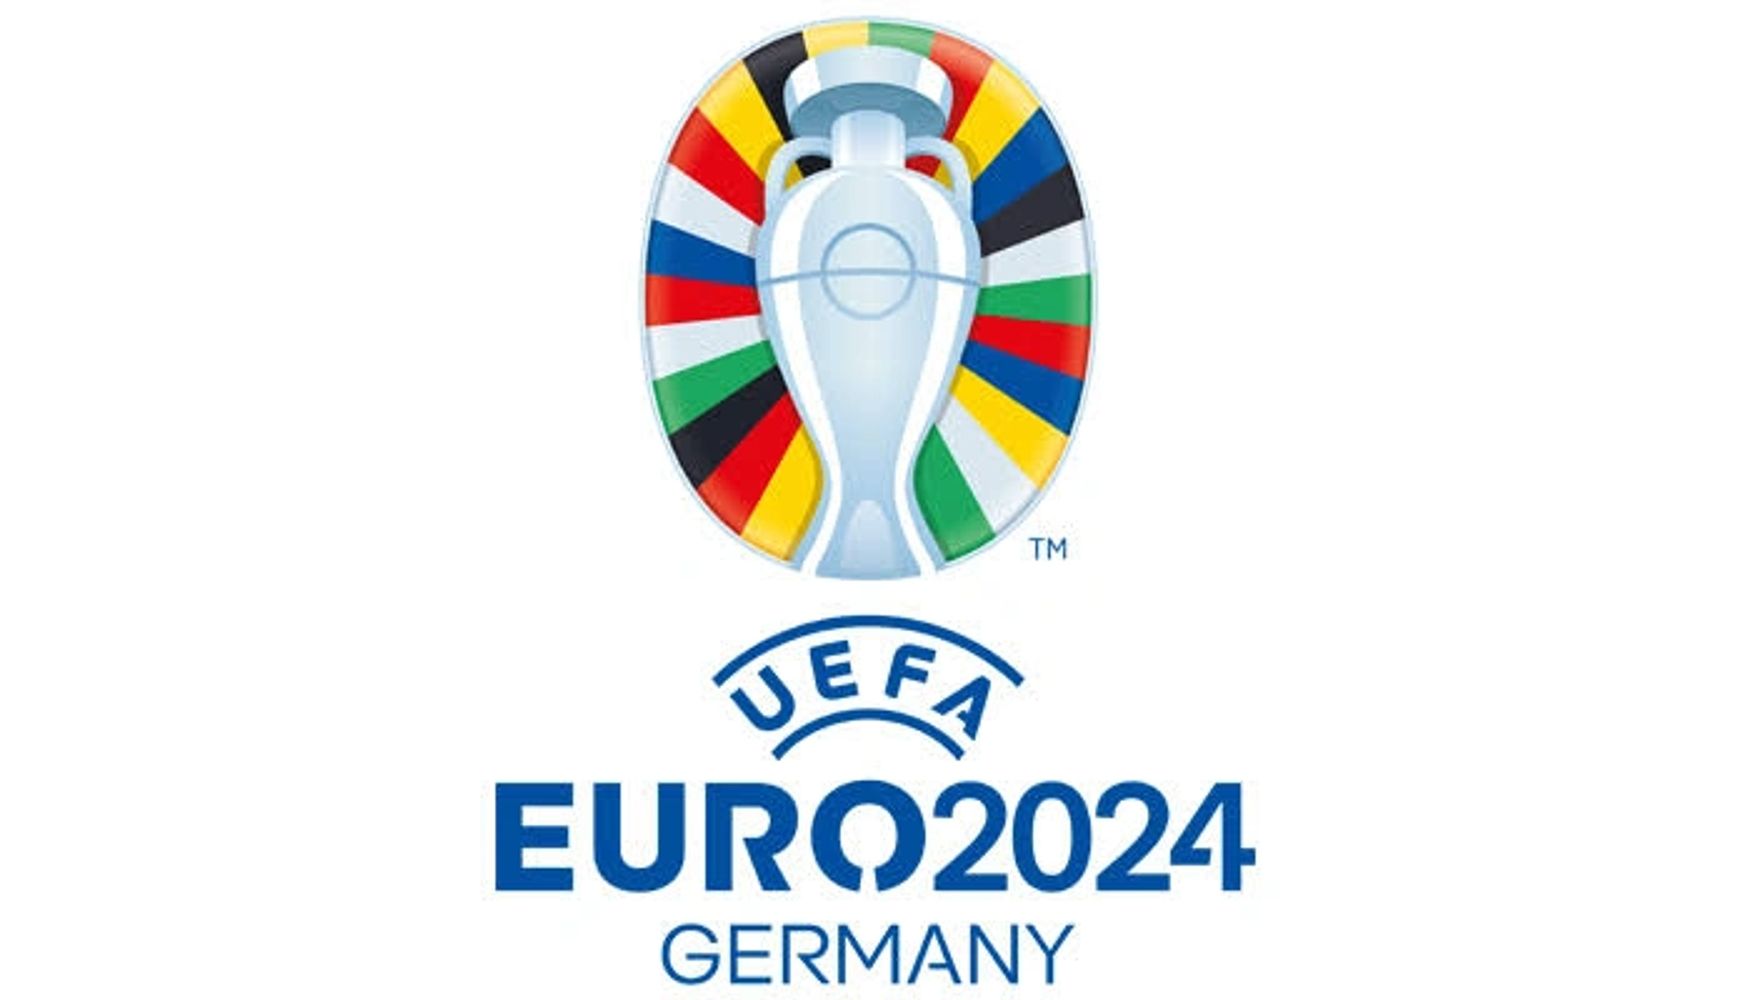 EM Fan STORE! Alles für die Europameisterschaft 2024 in Germany 🇩🇪 